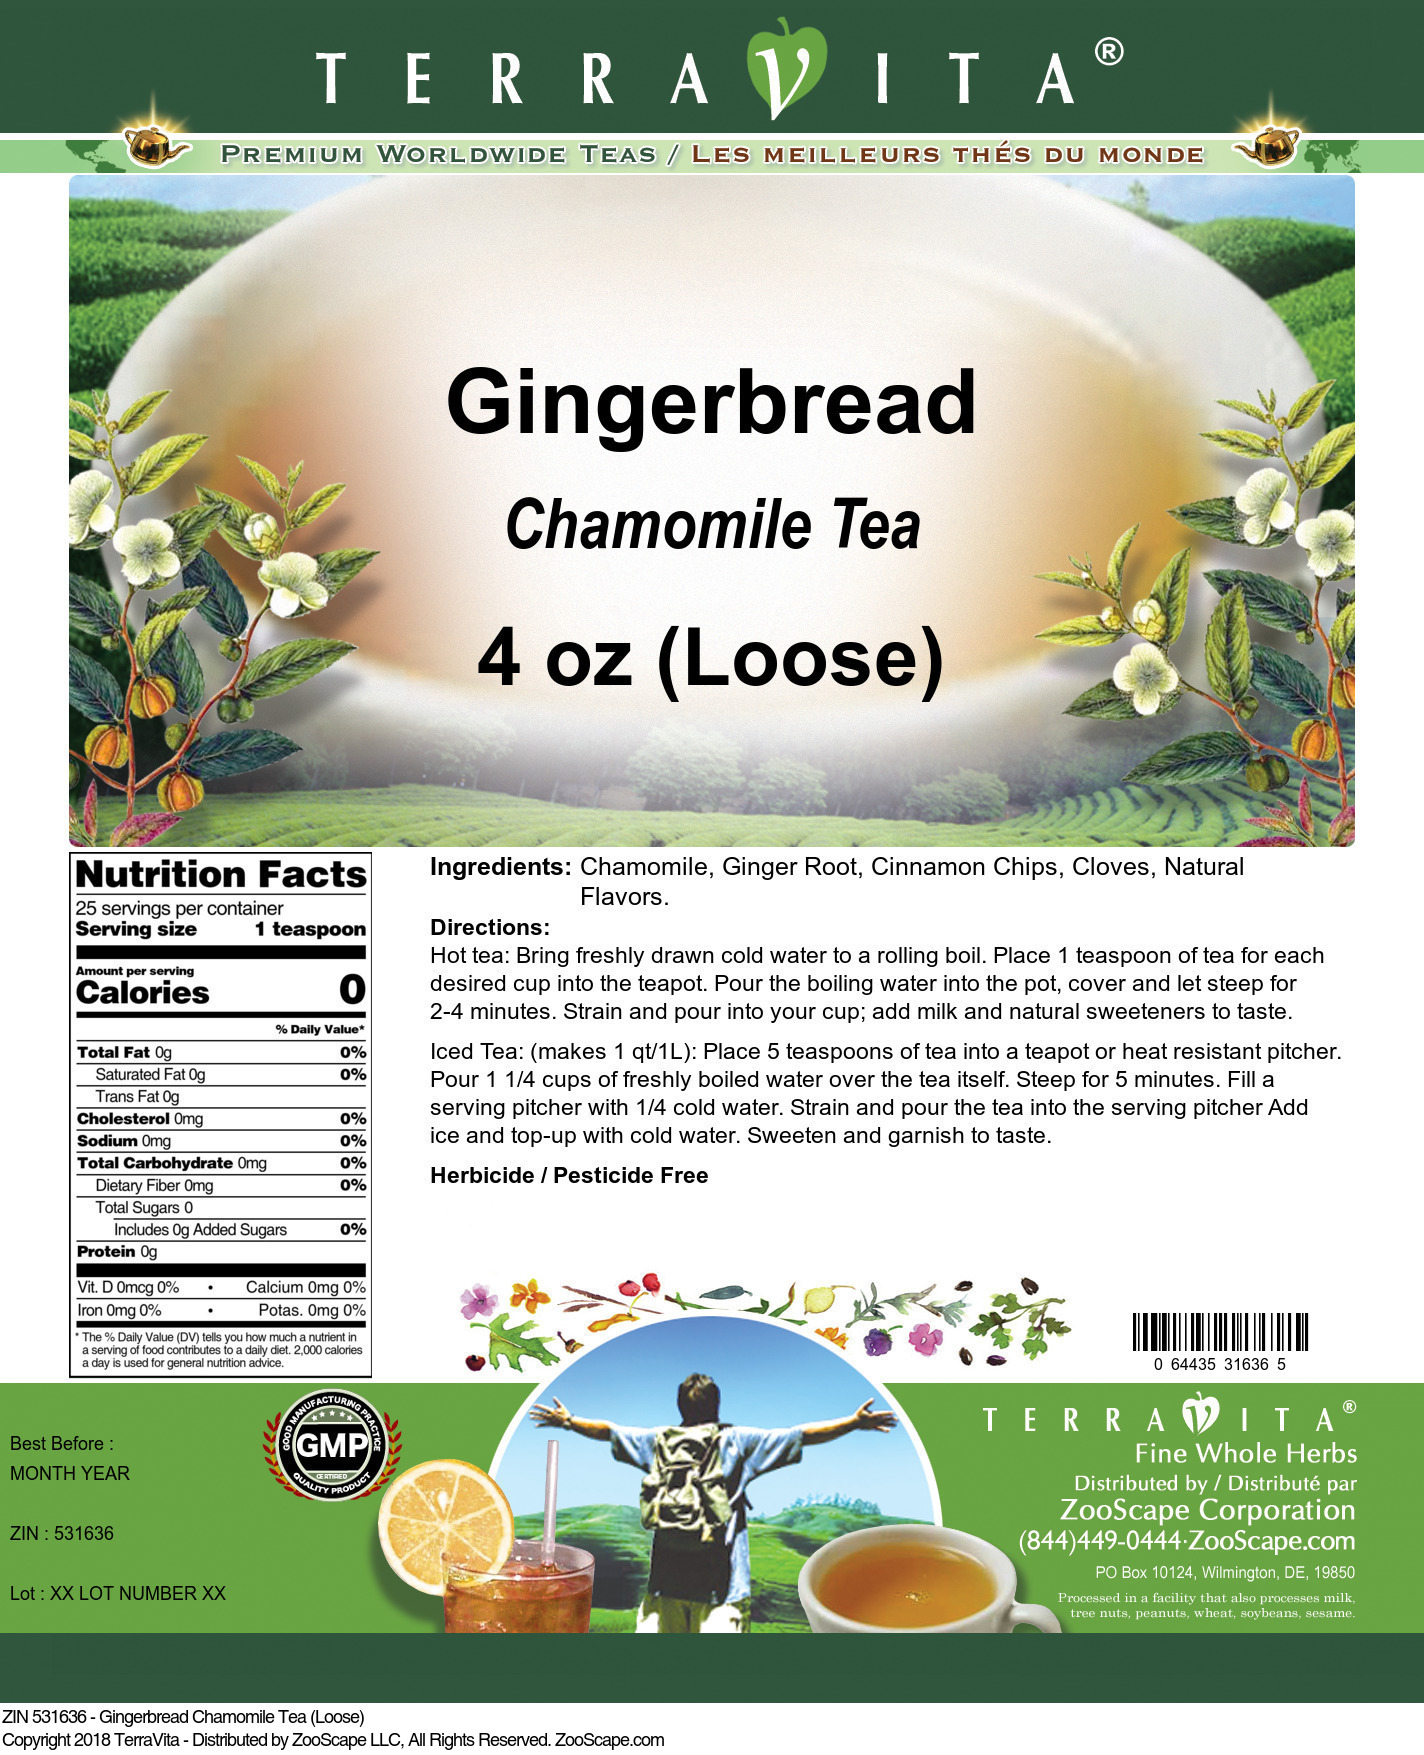 Gingerbread Chamomile Tea (Loose) - Label